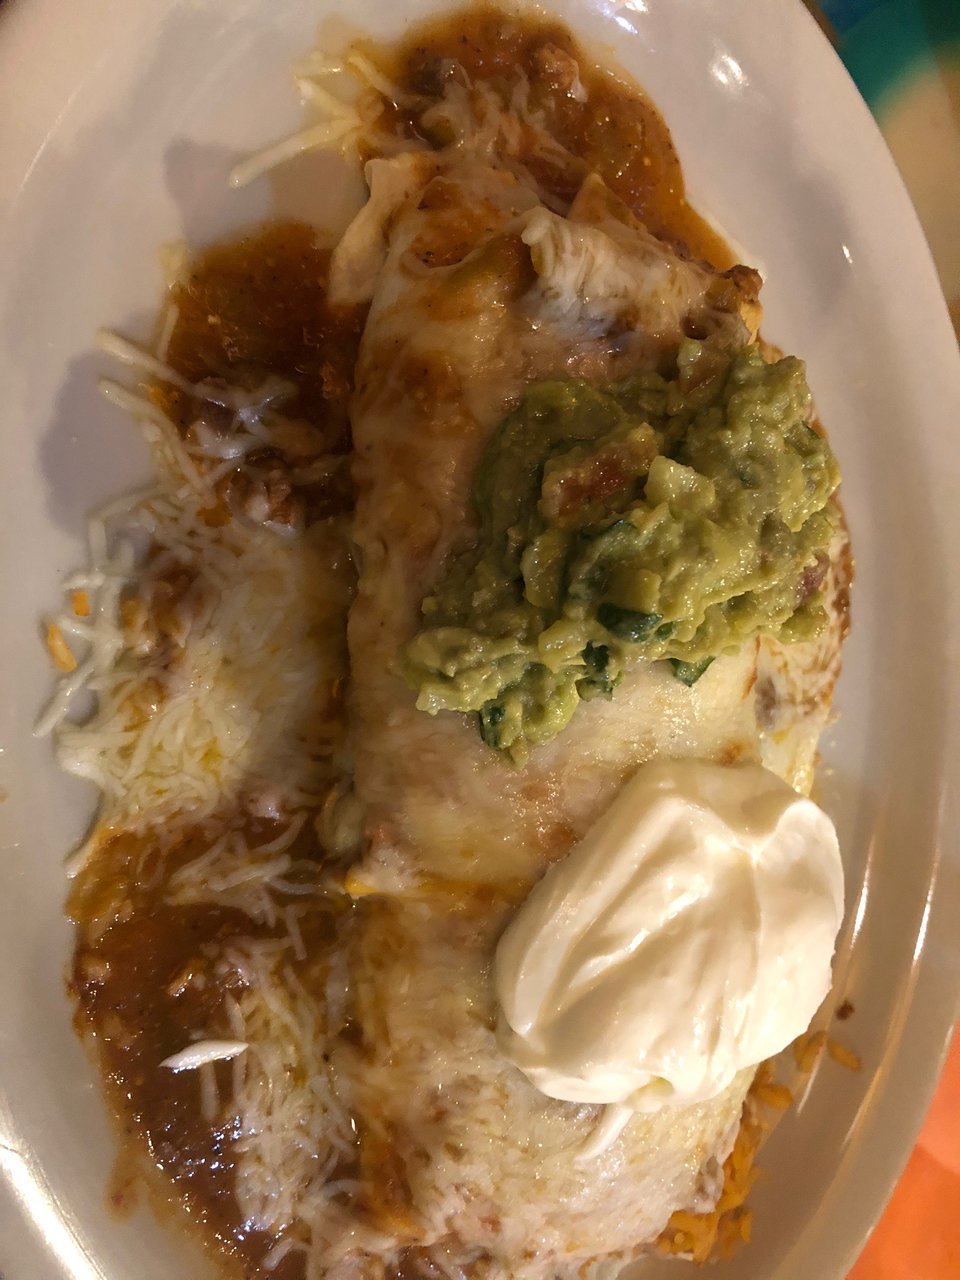 Lindo Mexico Restaurante Mexicano